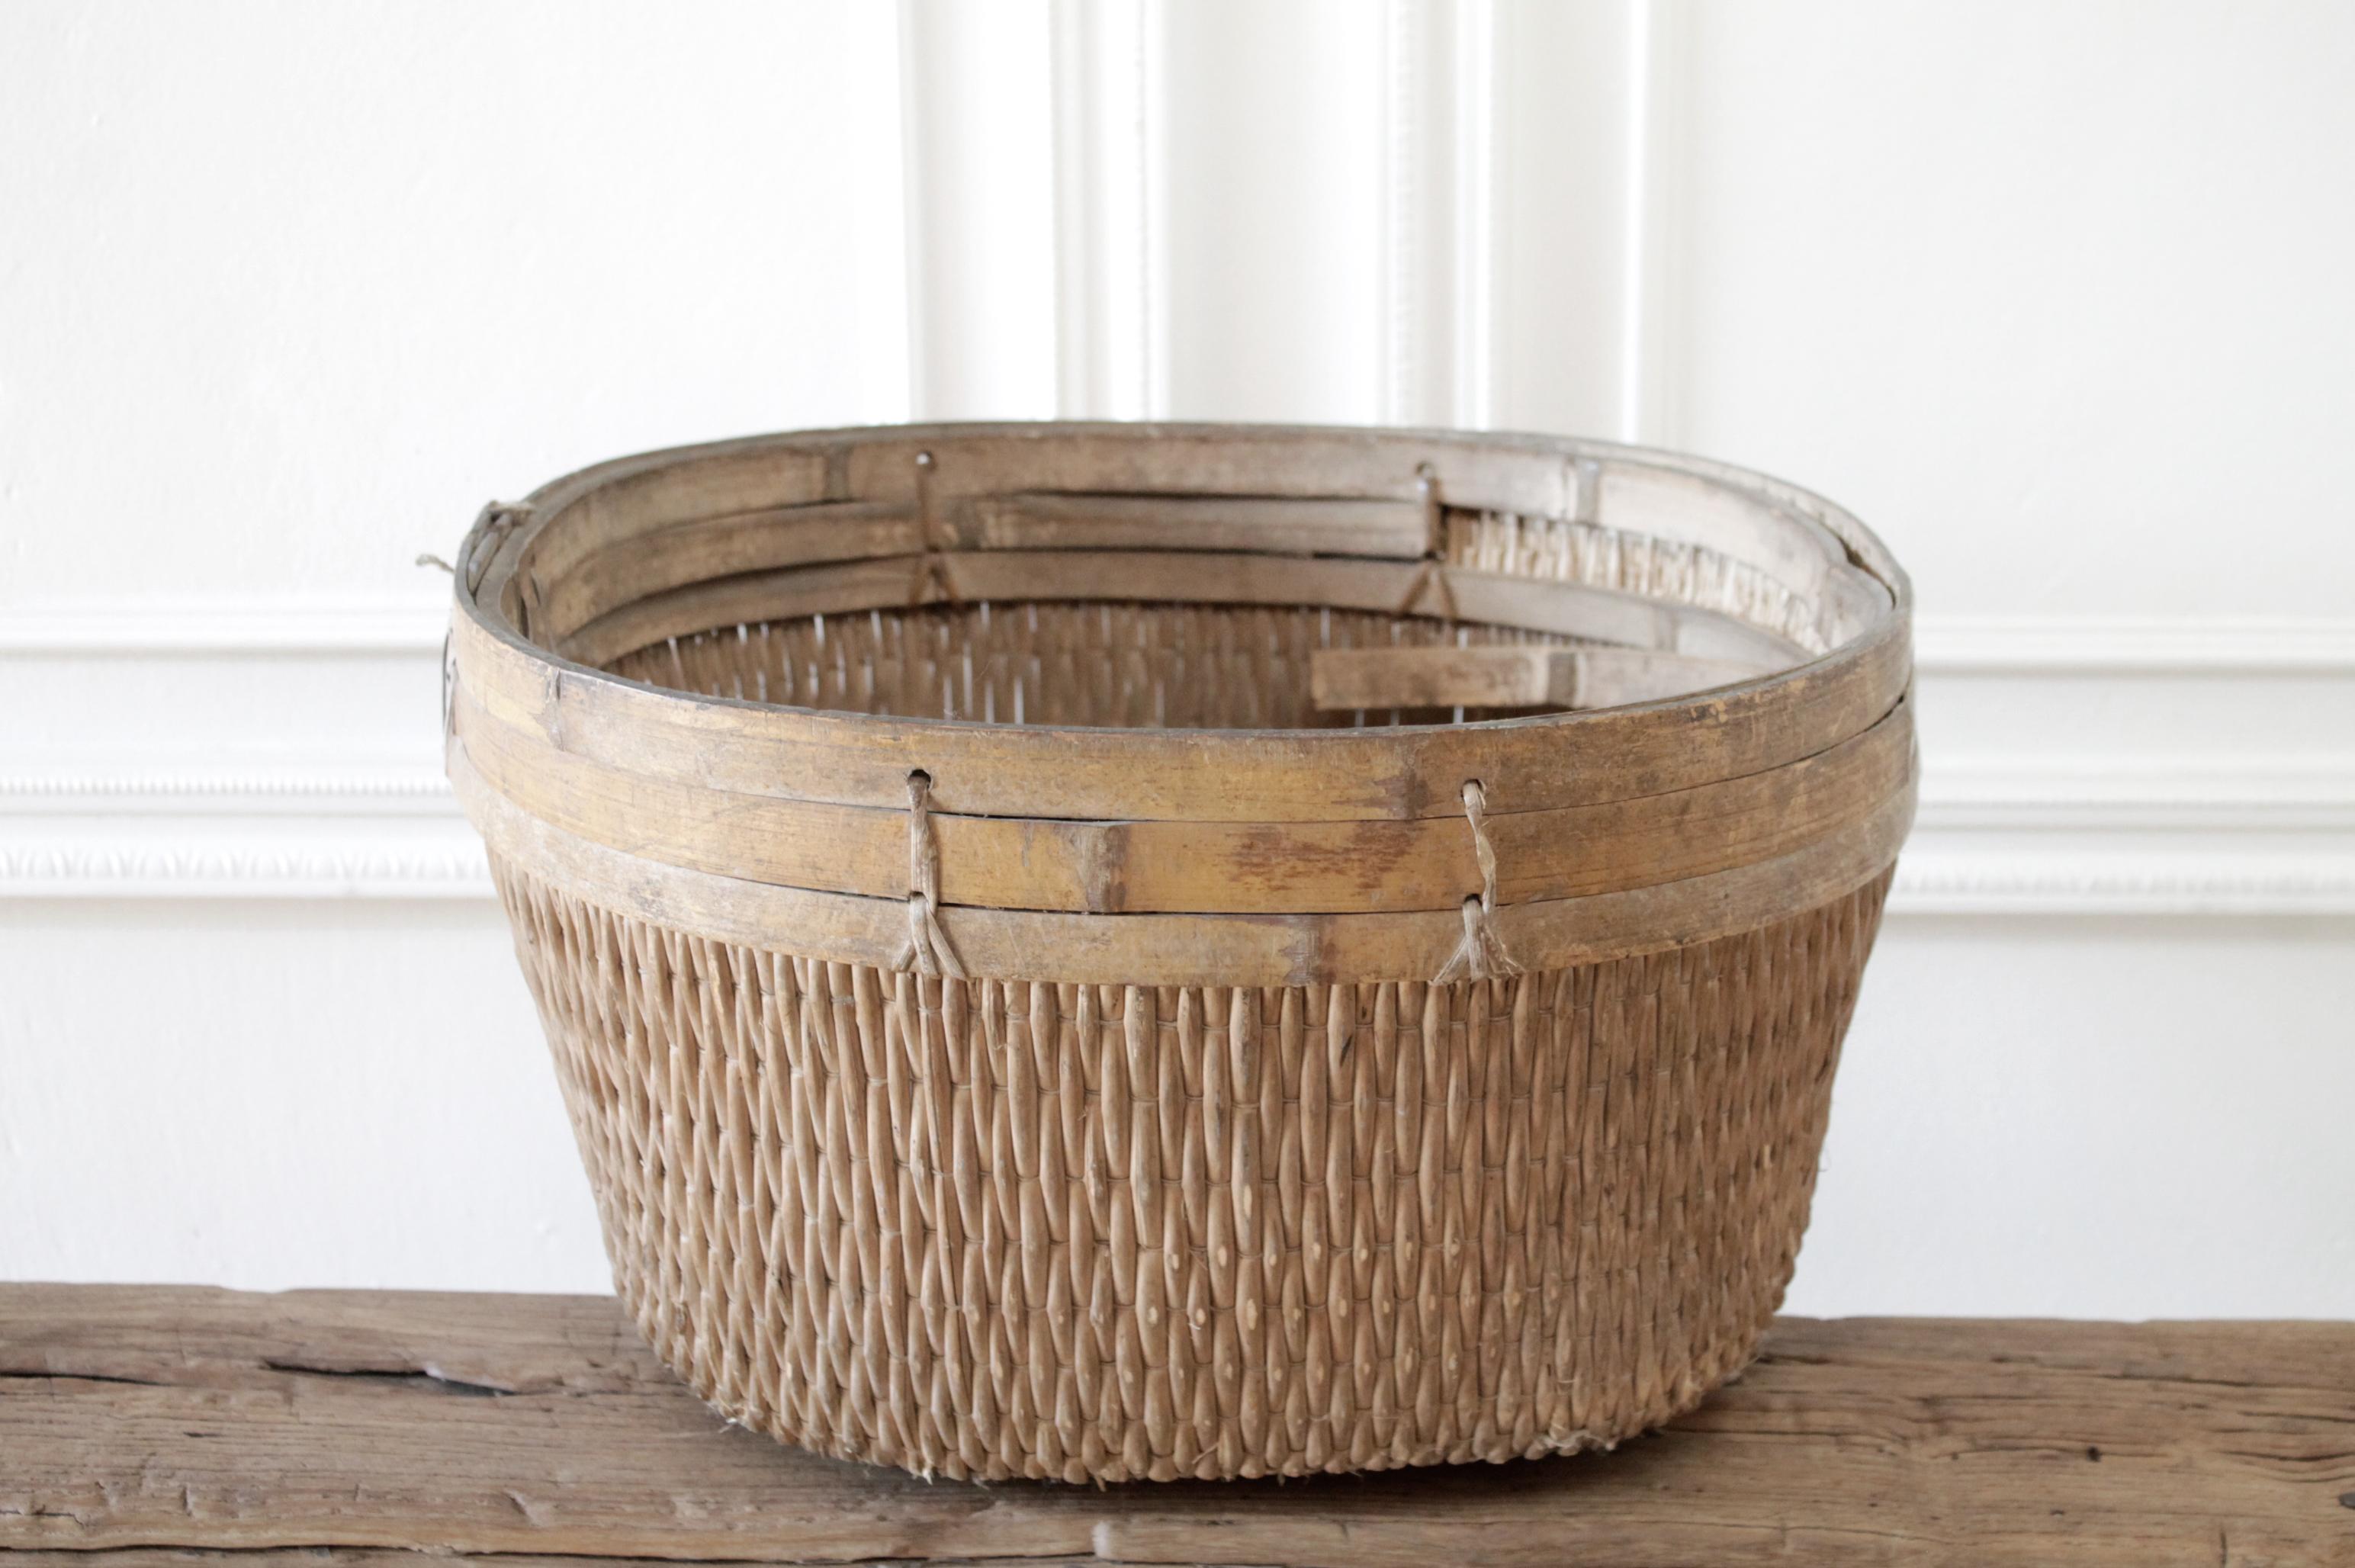 Medium size antique Chinese basket
Measures: 16